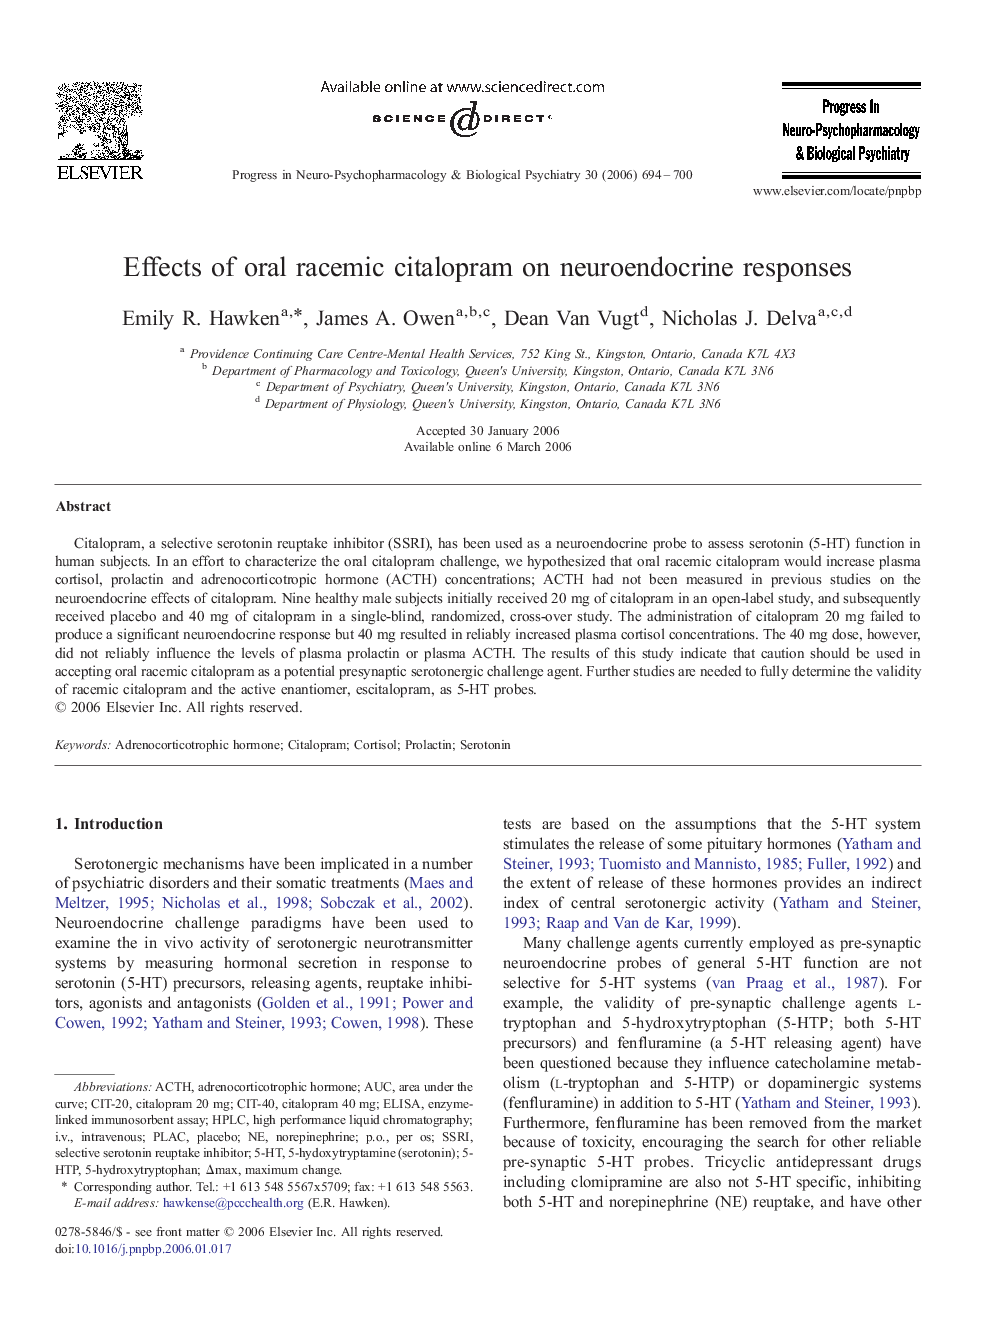 Effects of oral racemic citalopram on neuroendocrine responses